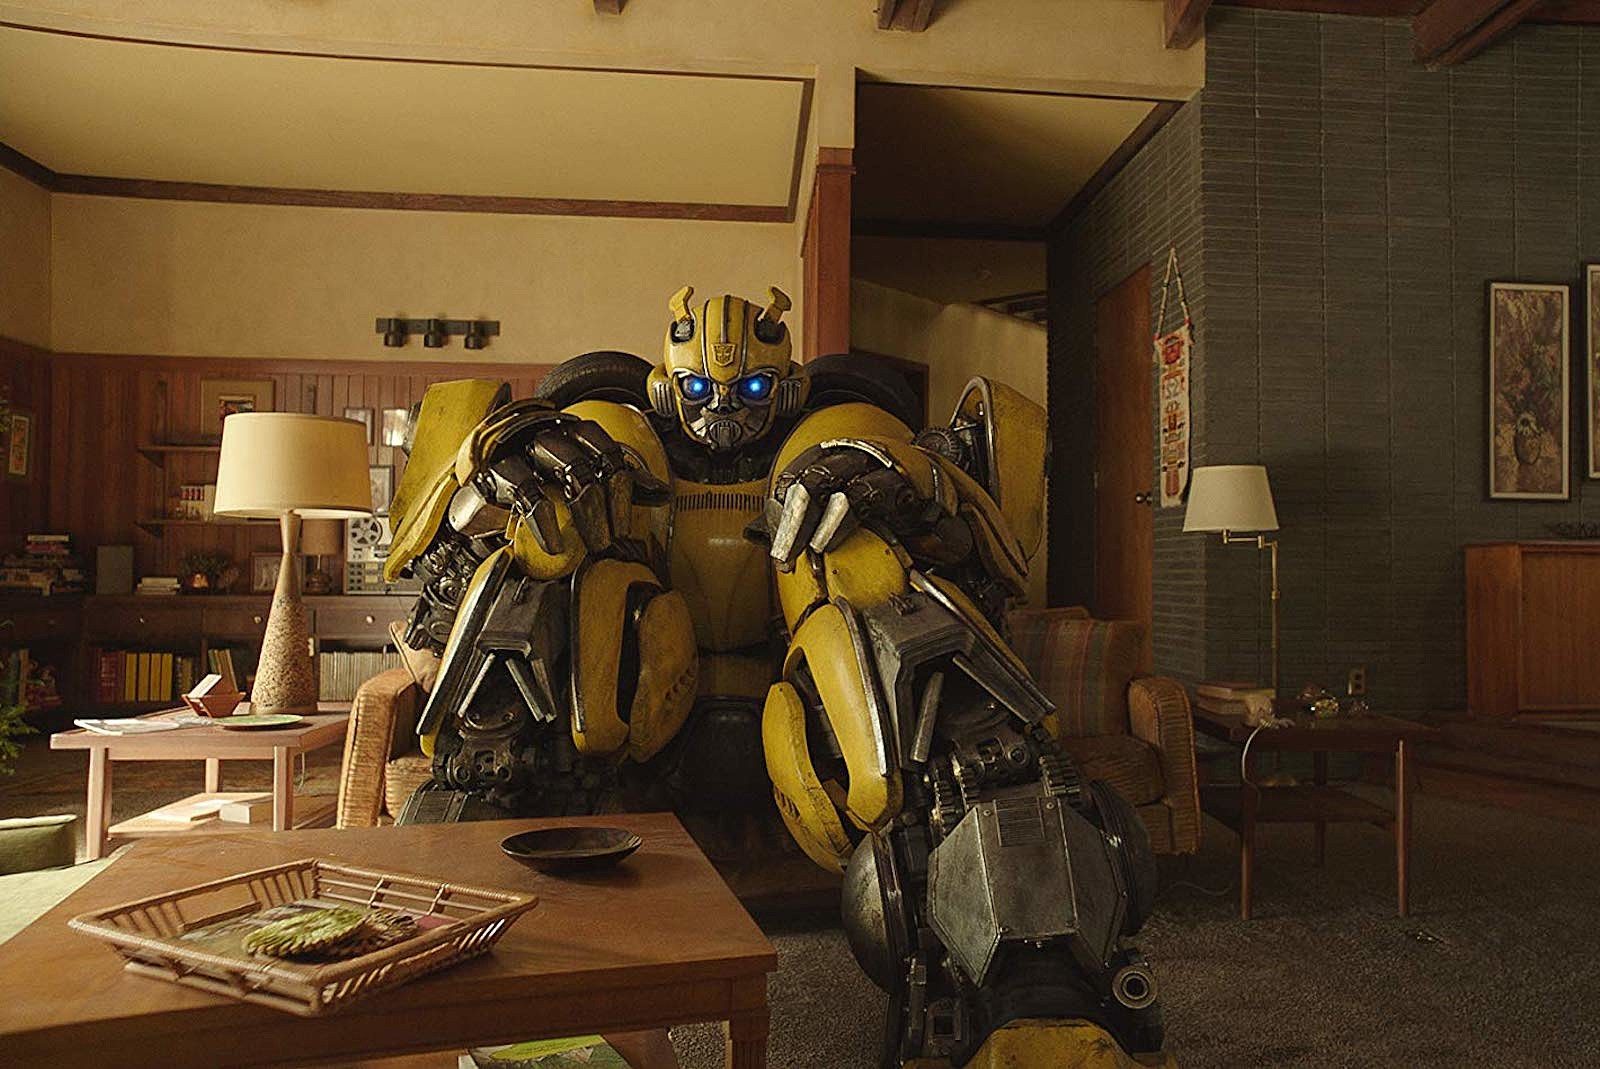 transformers new movie bumblebee